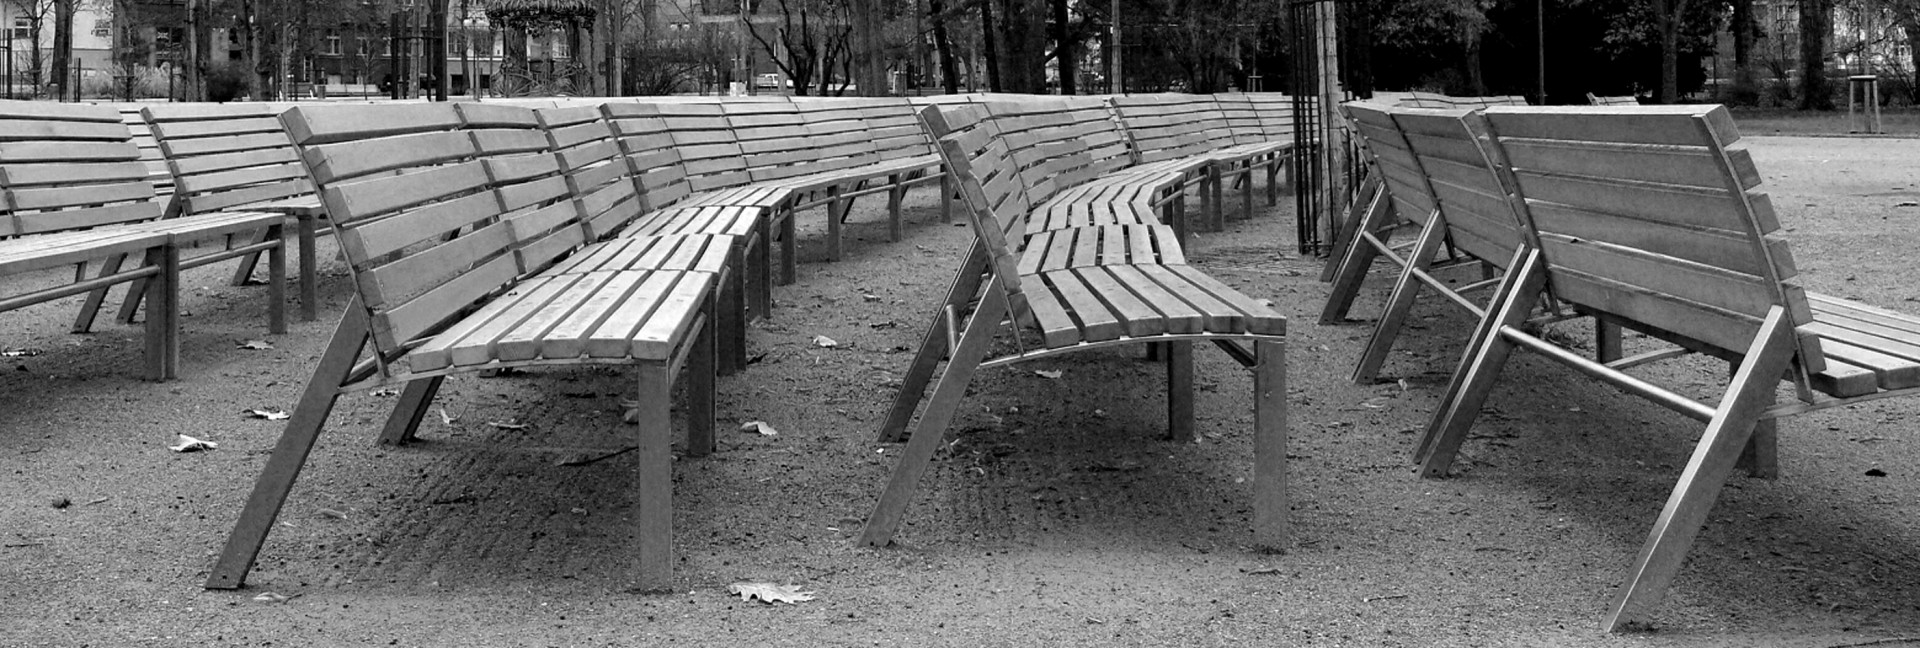 bench park auditorium free photo